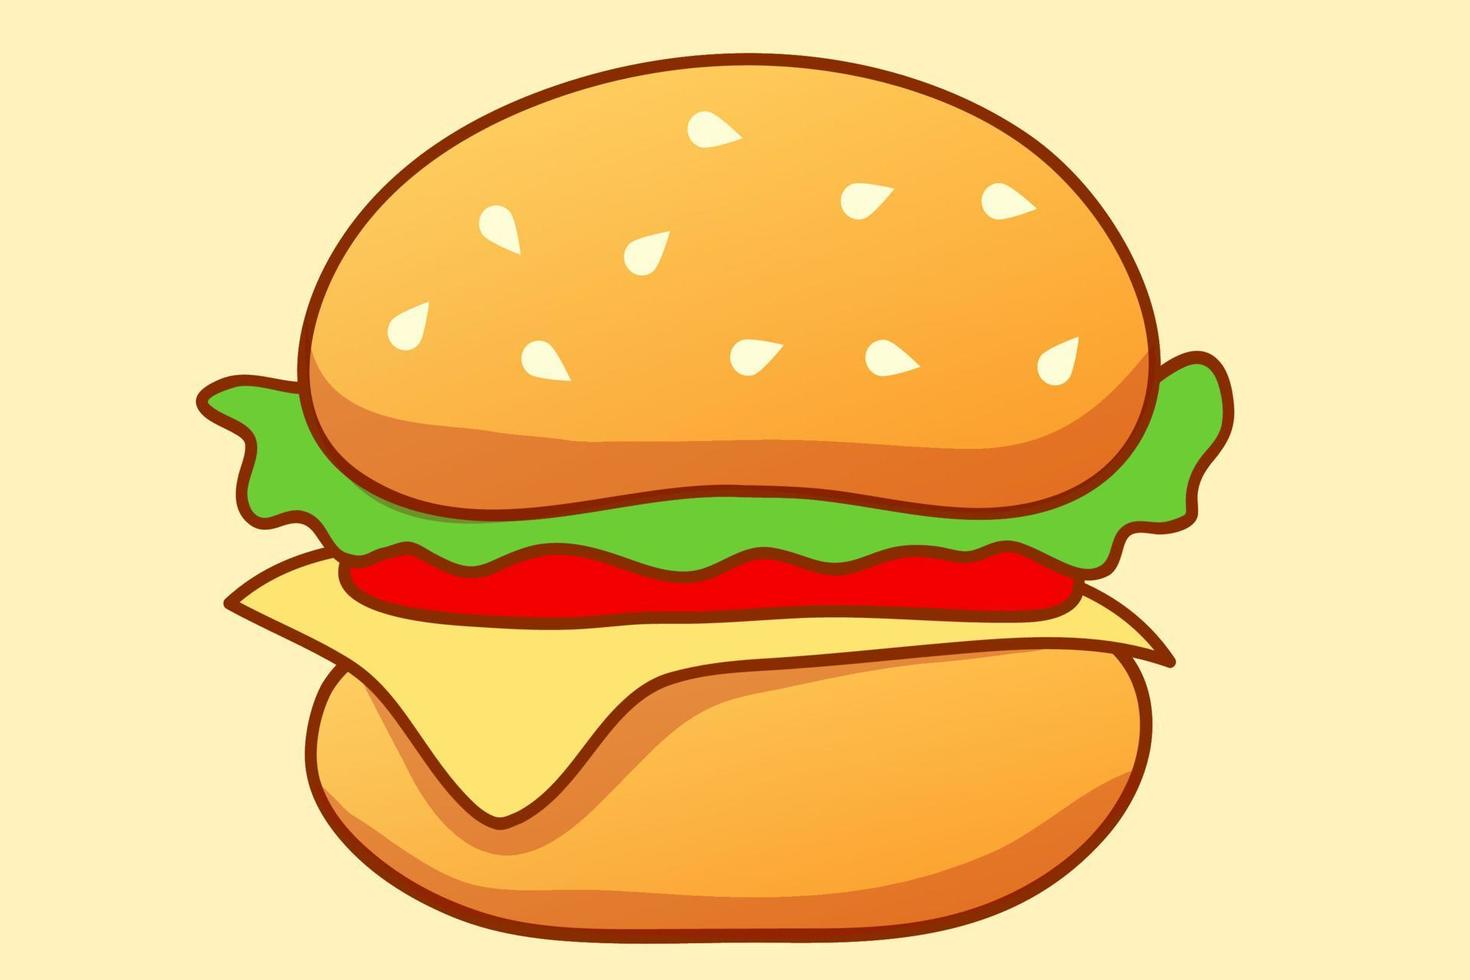 Testy hamburger cartoon illustration. Hamburger with cheese, salad and tomato. vector